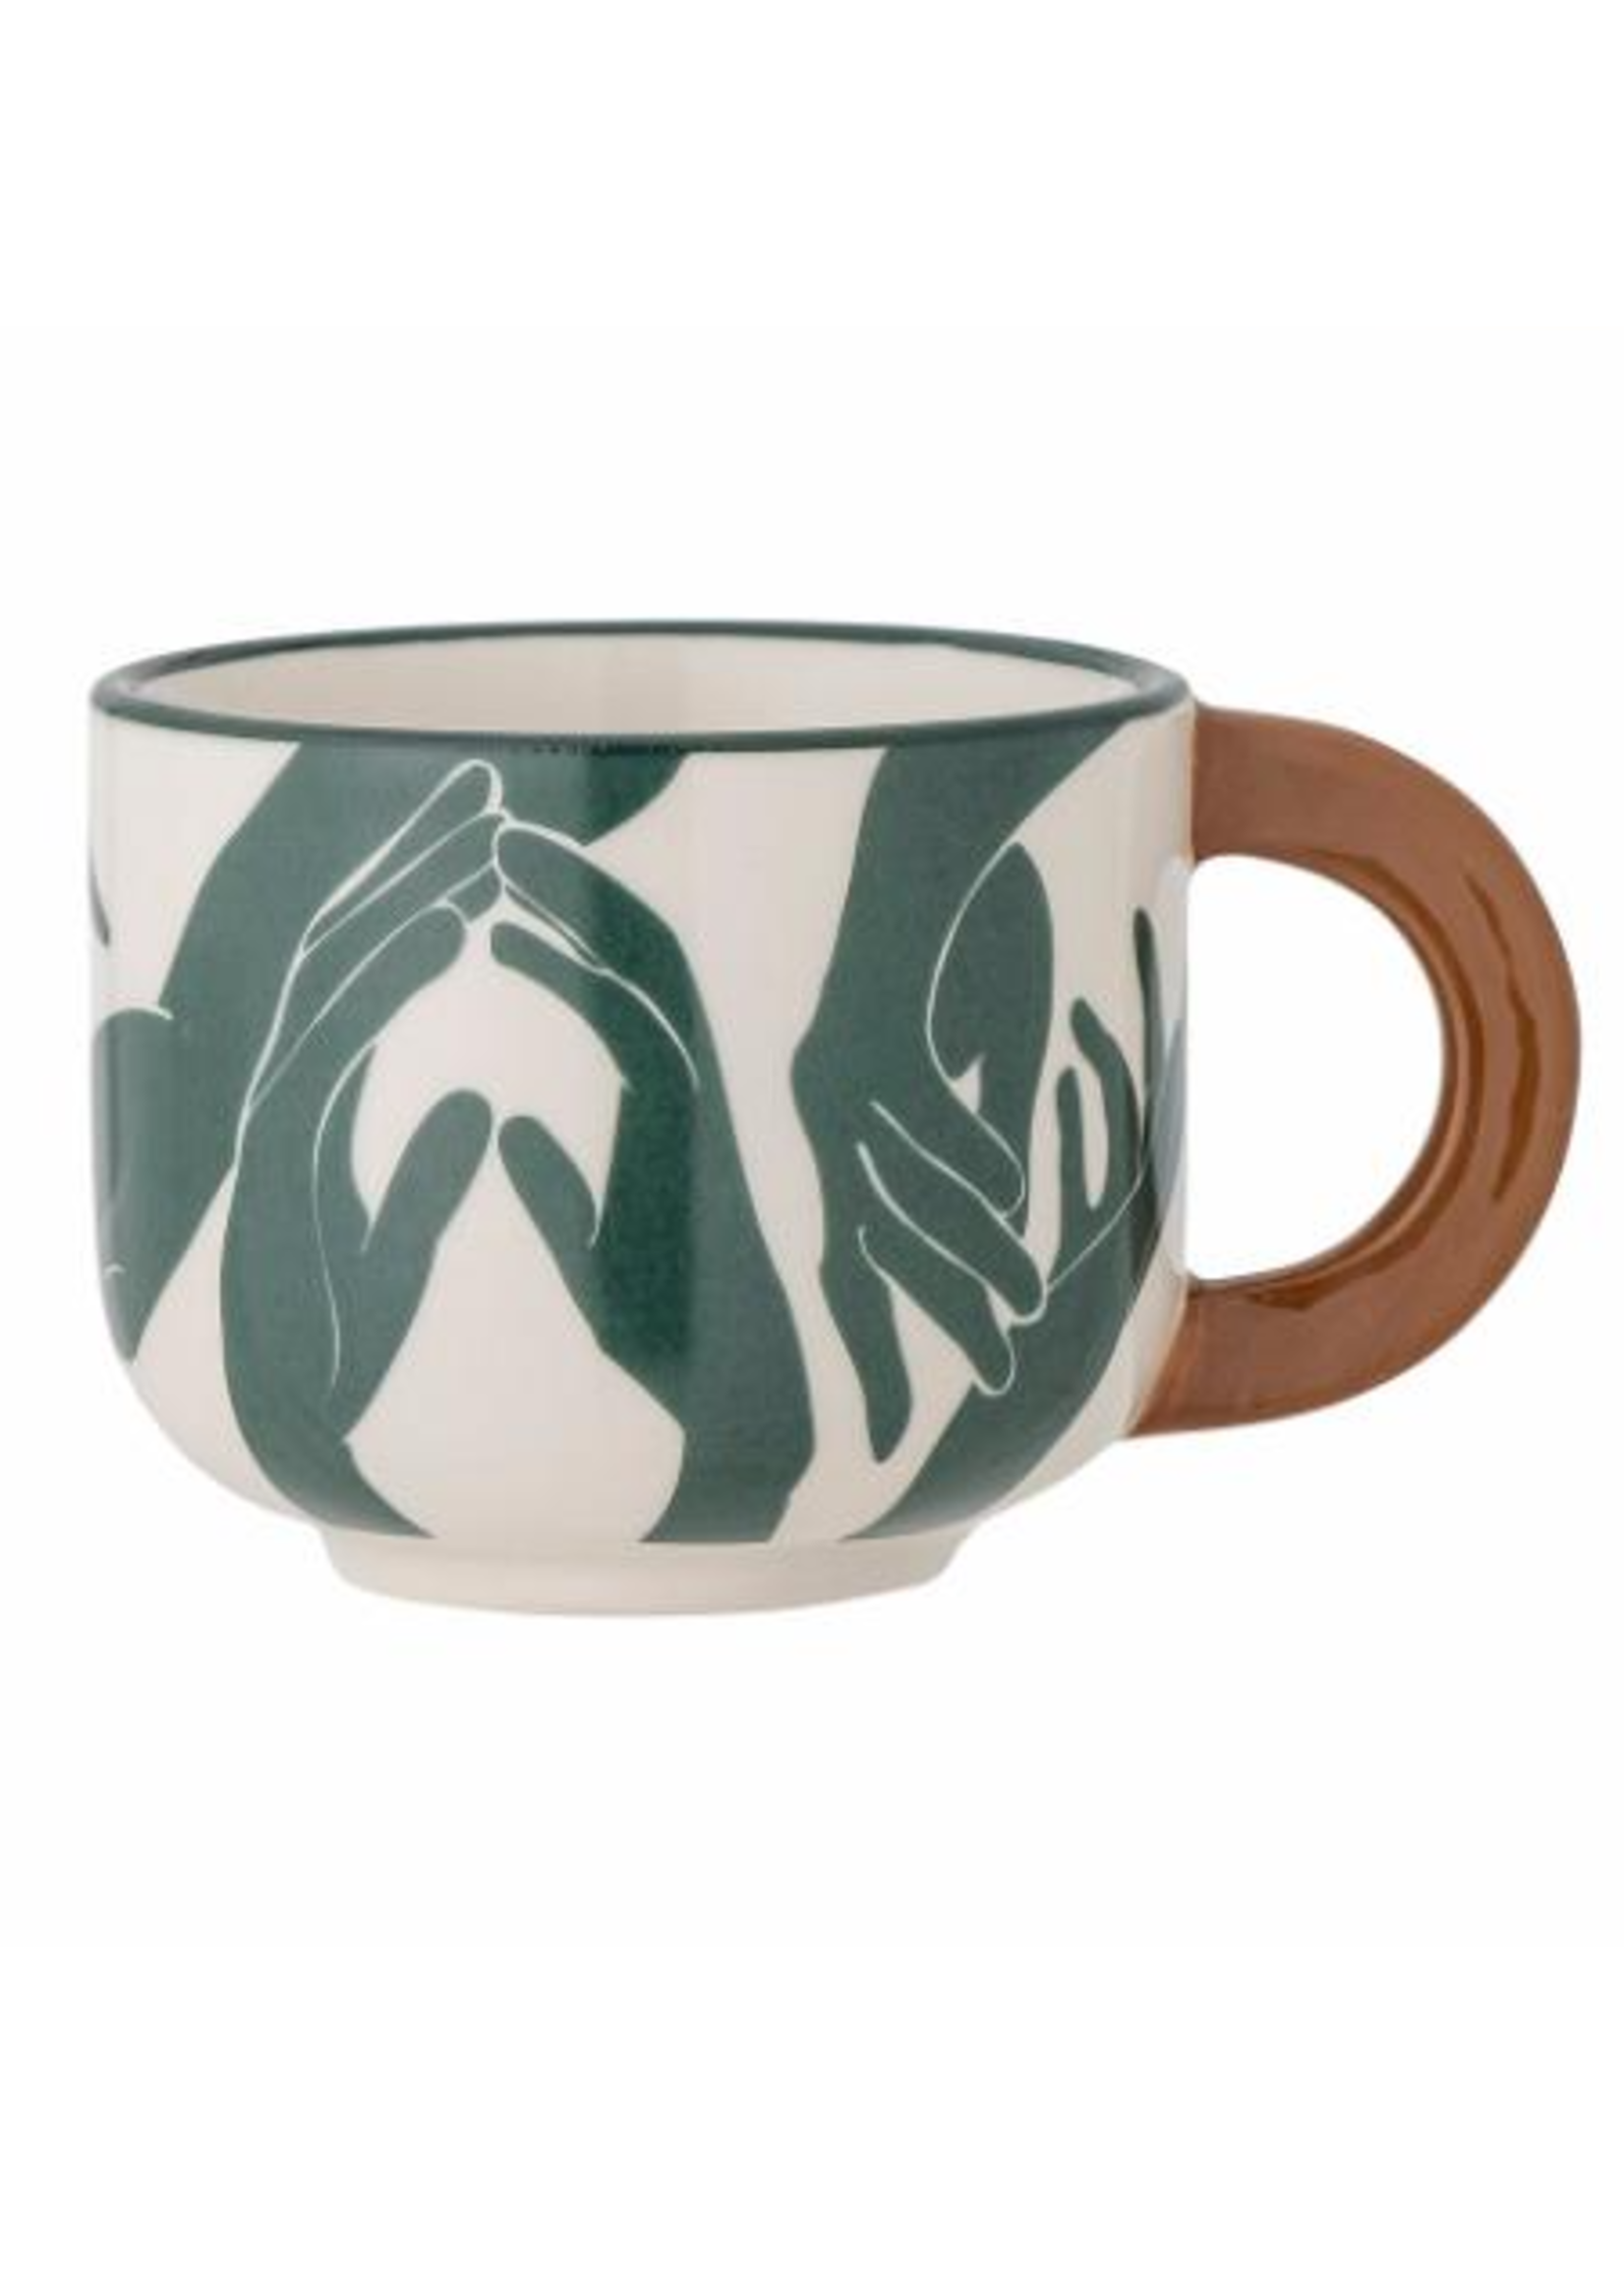 BLOOMINGVILLE- Carim Cup. Green hand